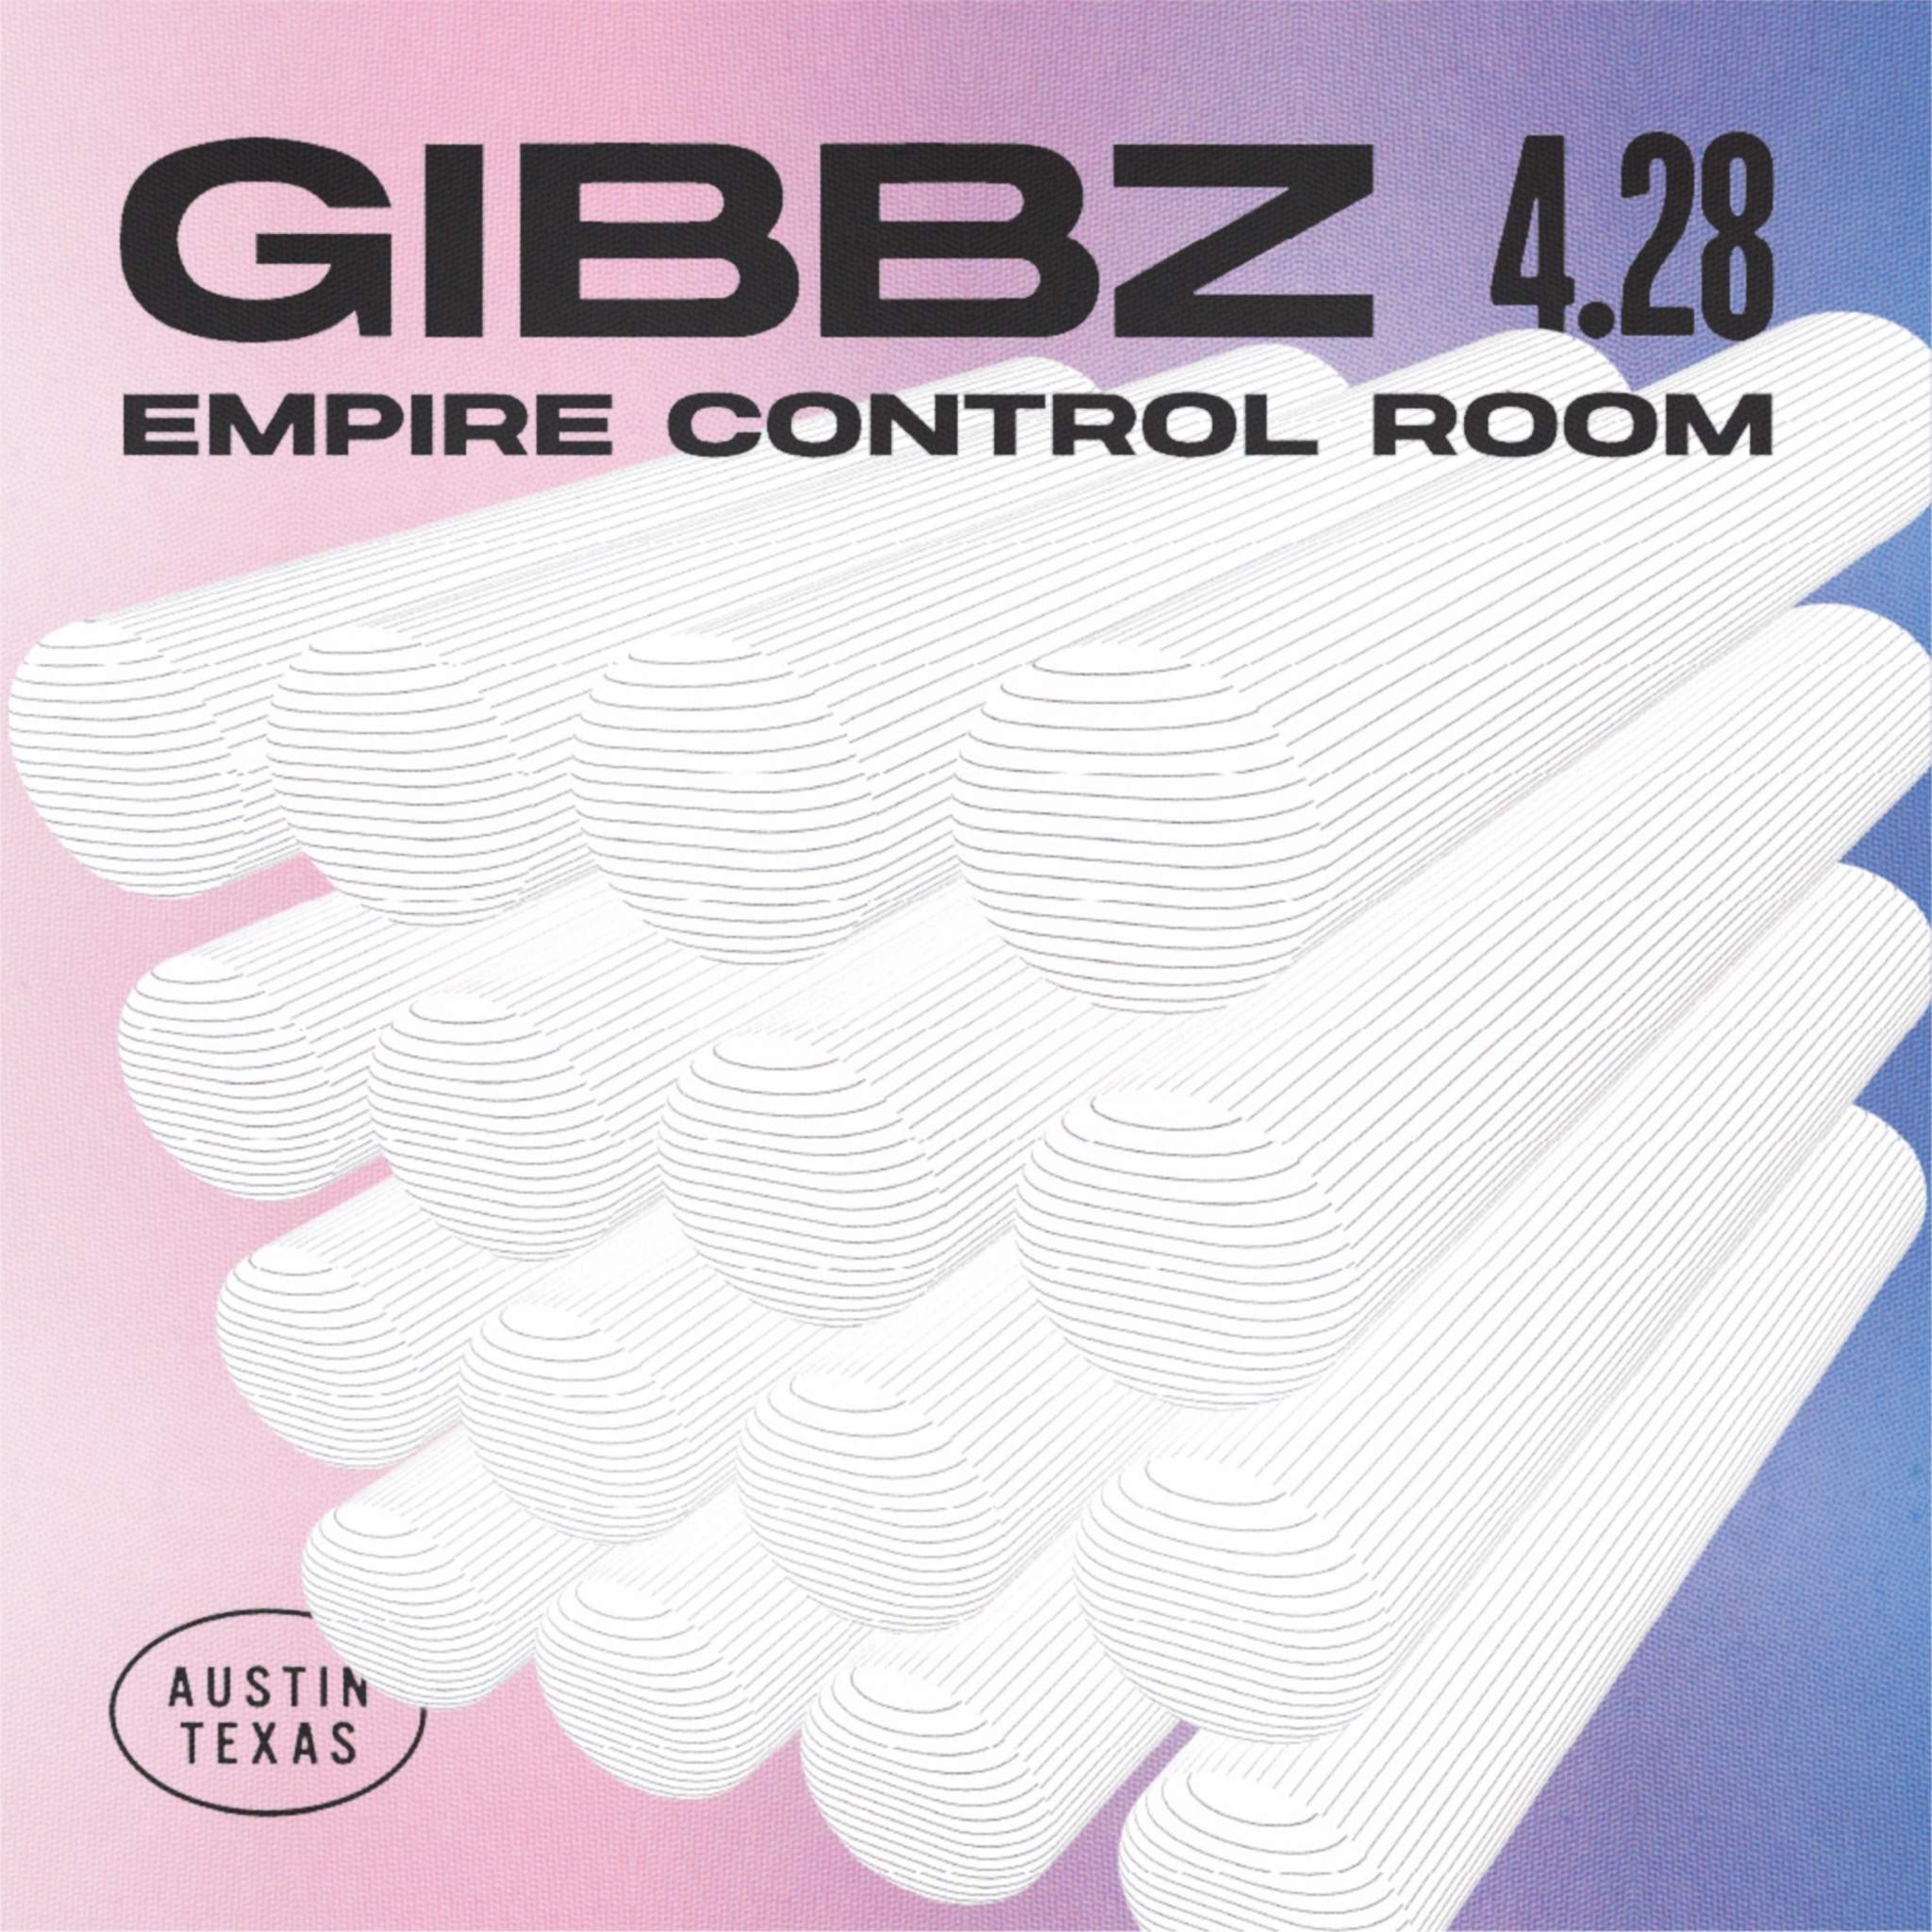 Empire presents: GIBBZ in the Control Room - フライヤー表